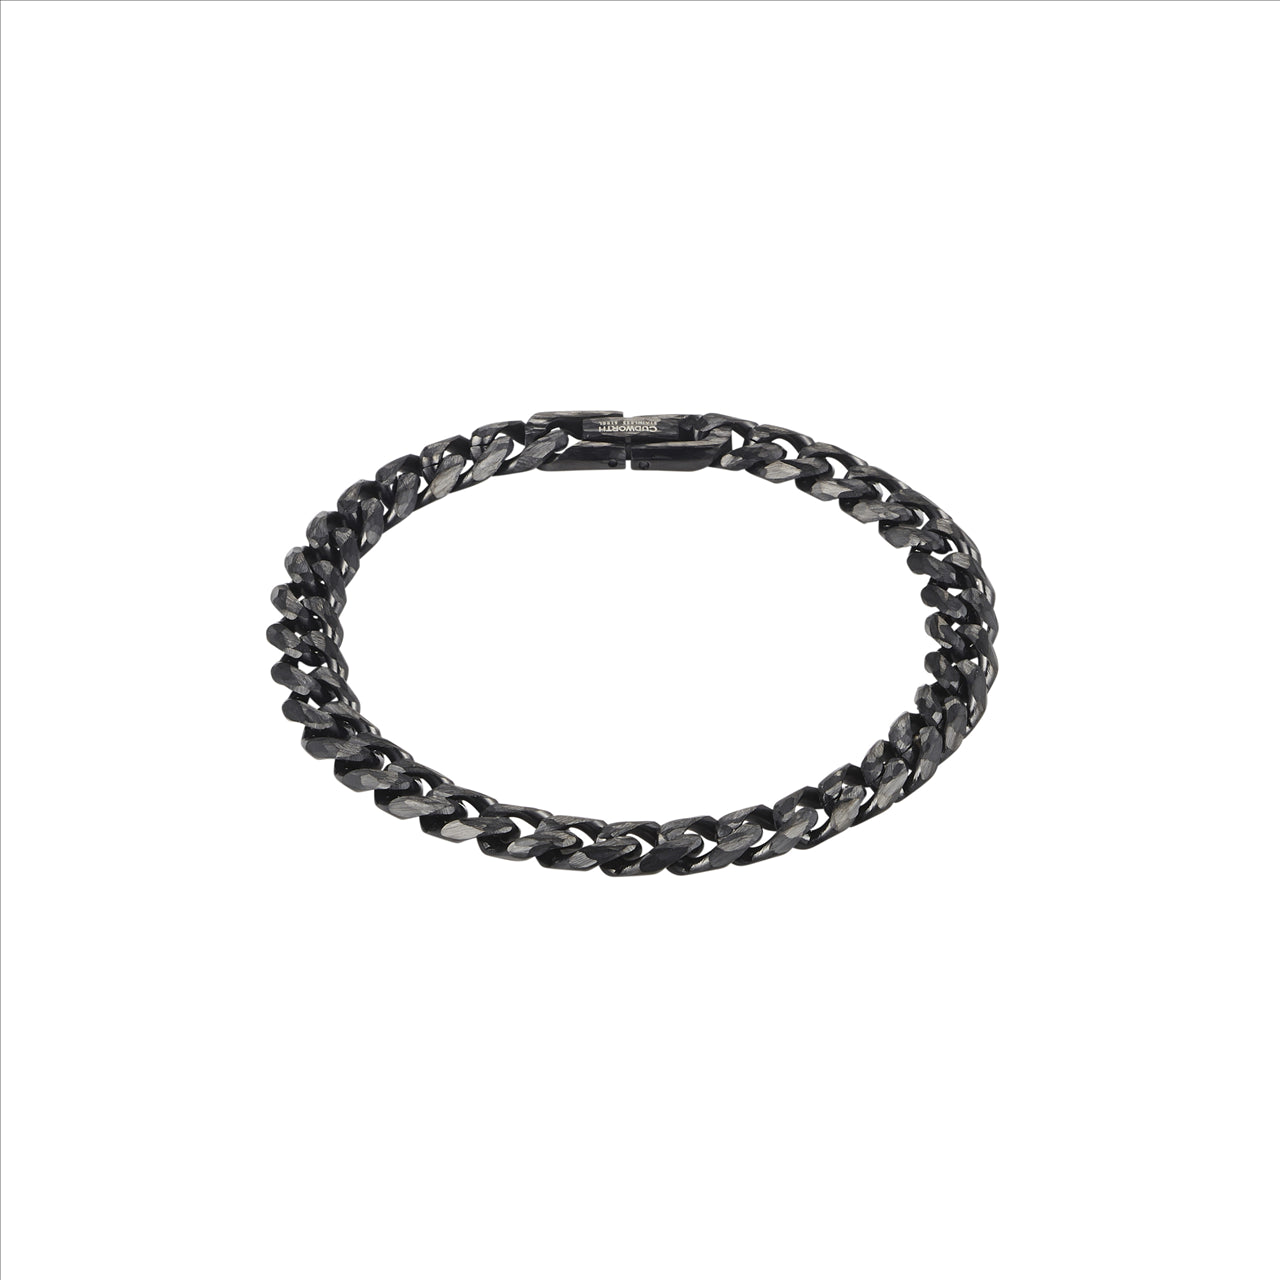 Bracelet - Gents ip black stainless steel chain bracelet